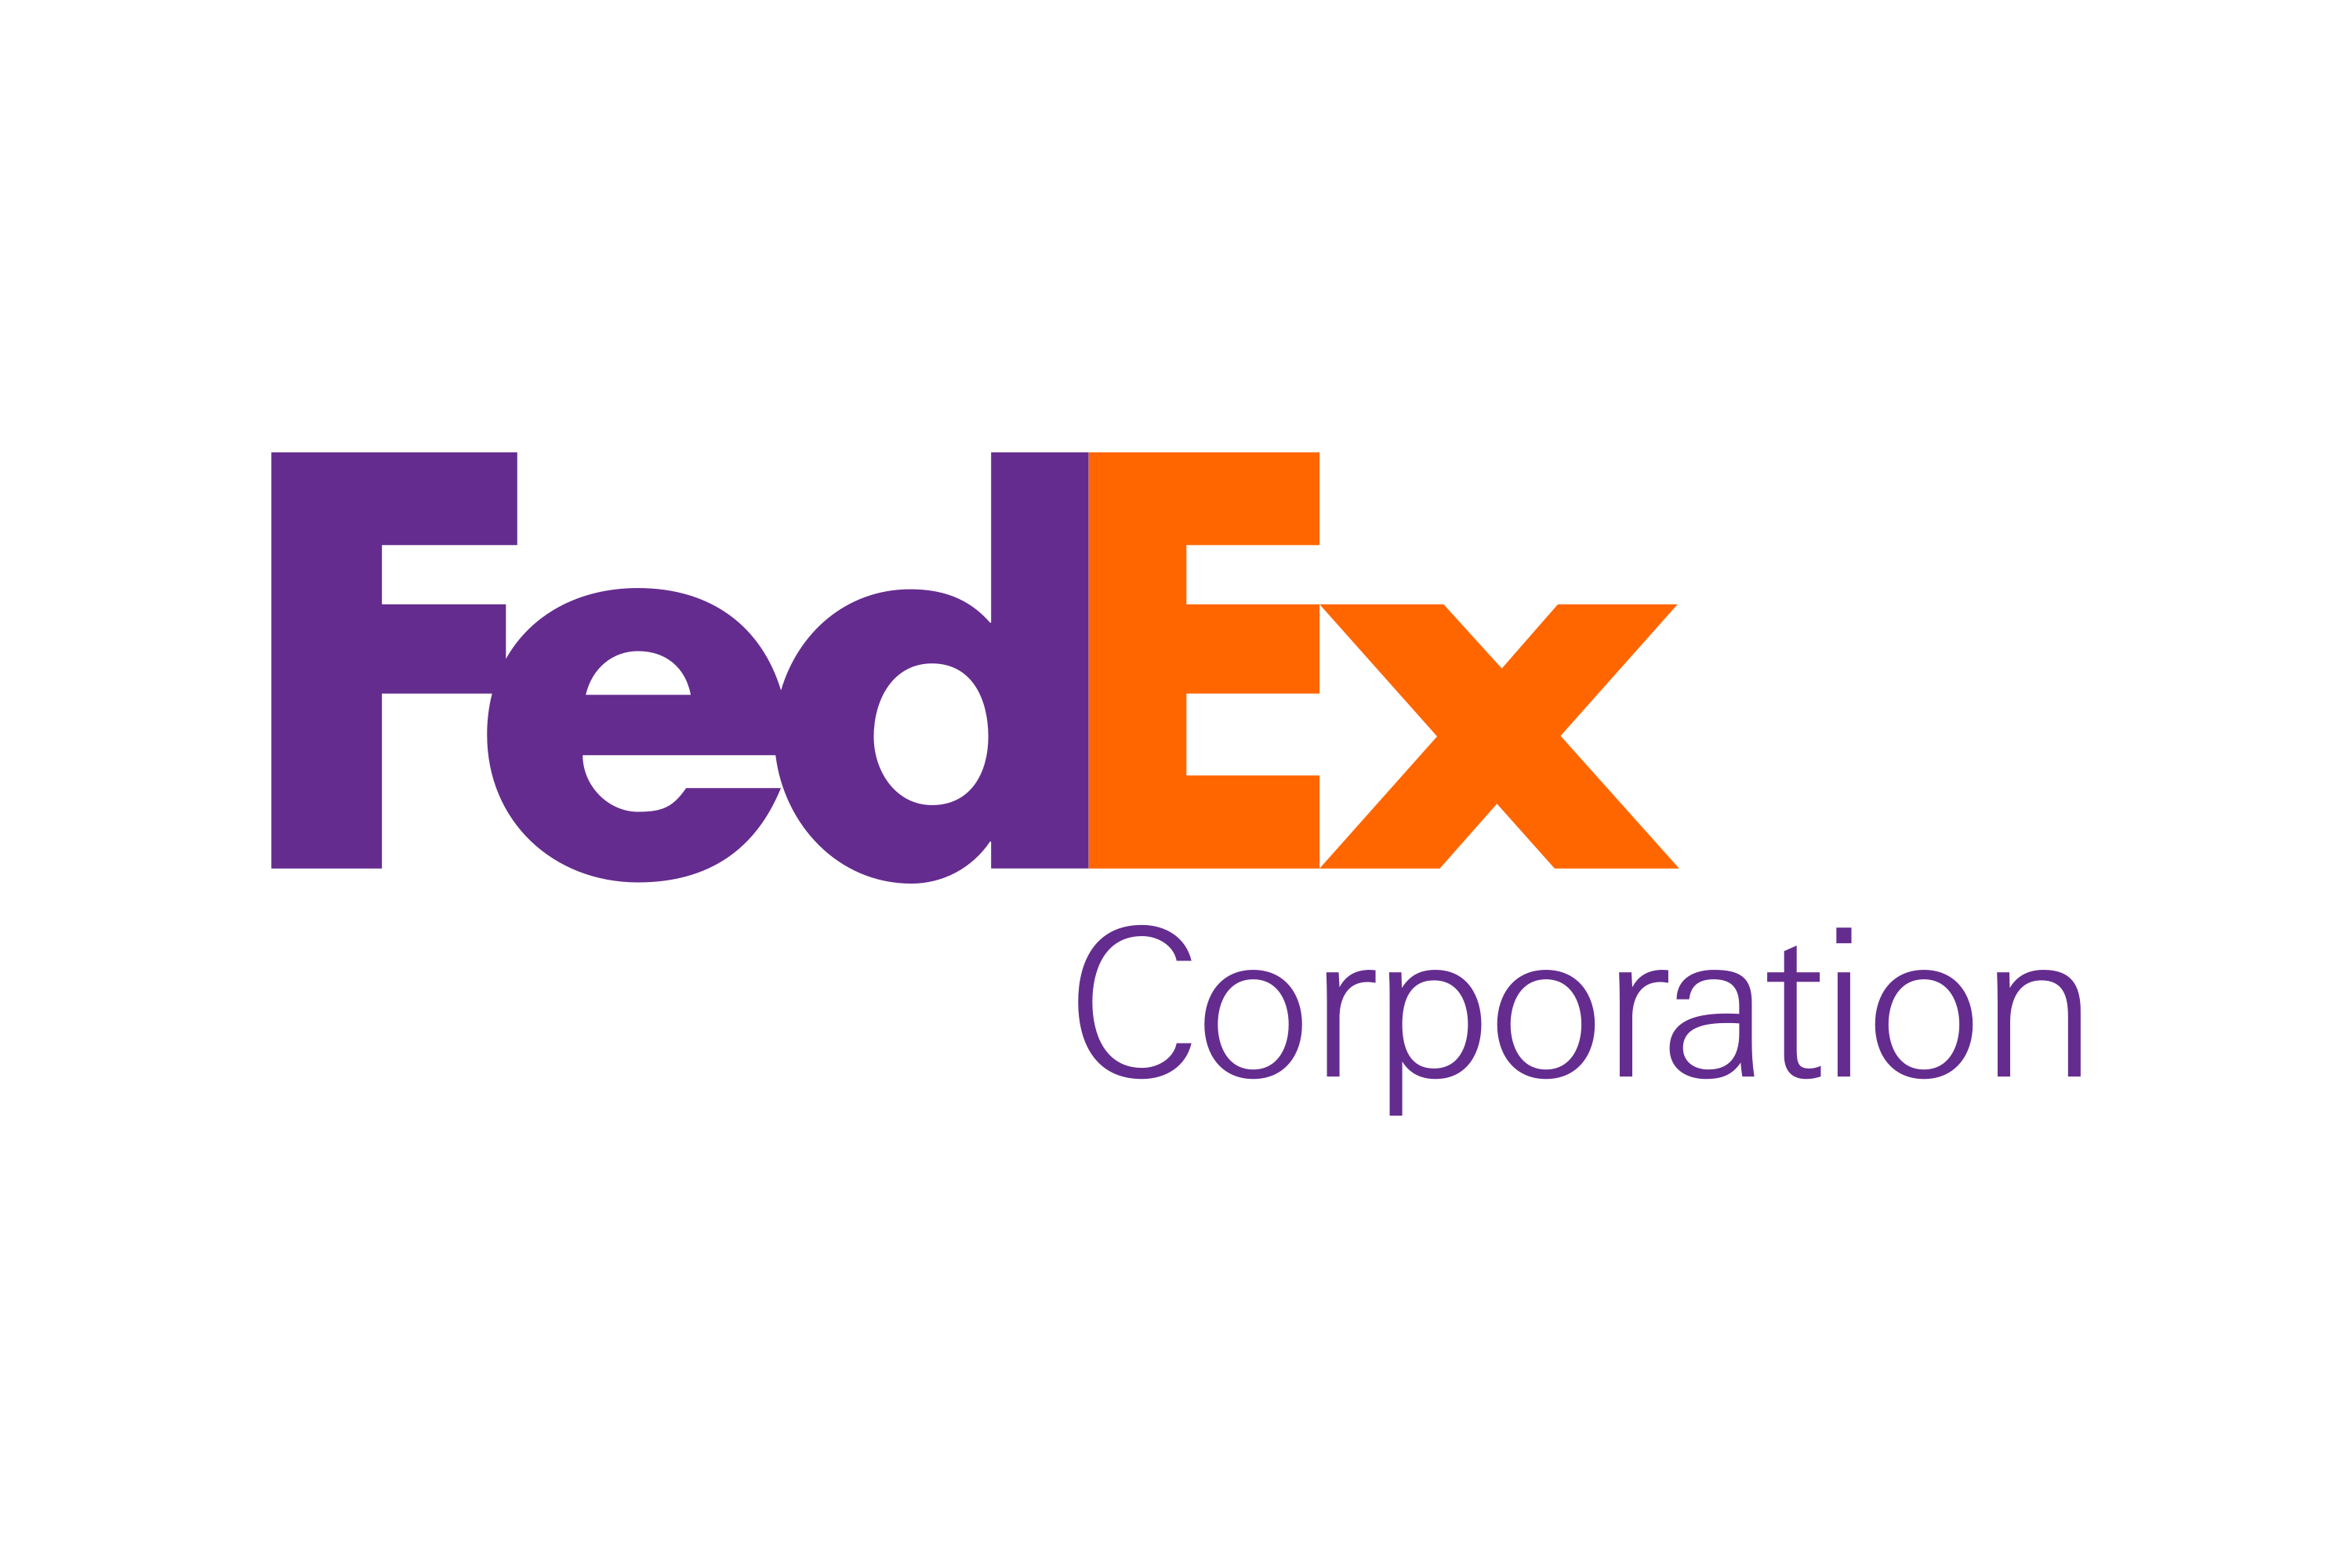 Logos corporation. Логотип с Corp.. Экспресс логотип. ФЕДЕХ логотип. FEDEX logo.